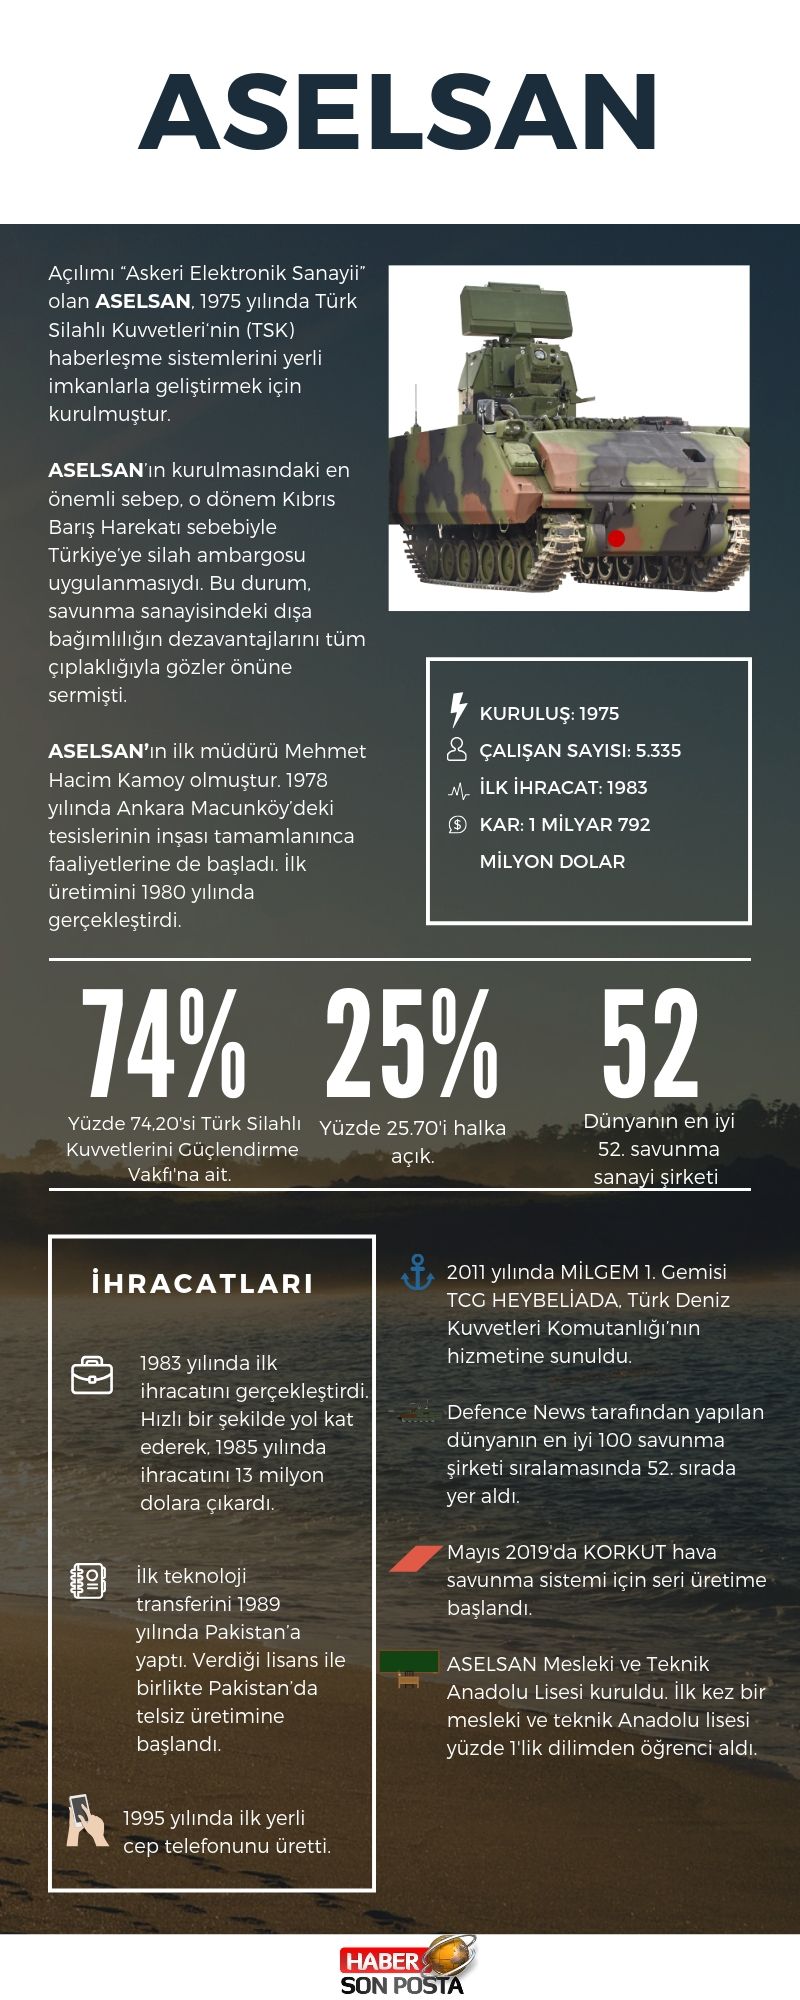 Türk savunma sanayi devi: ASELSAN